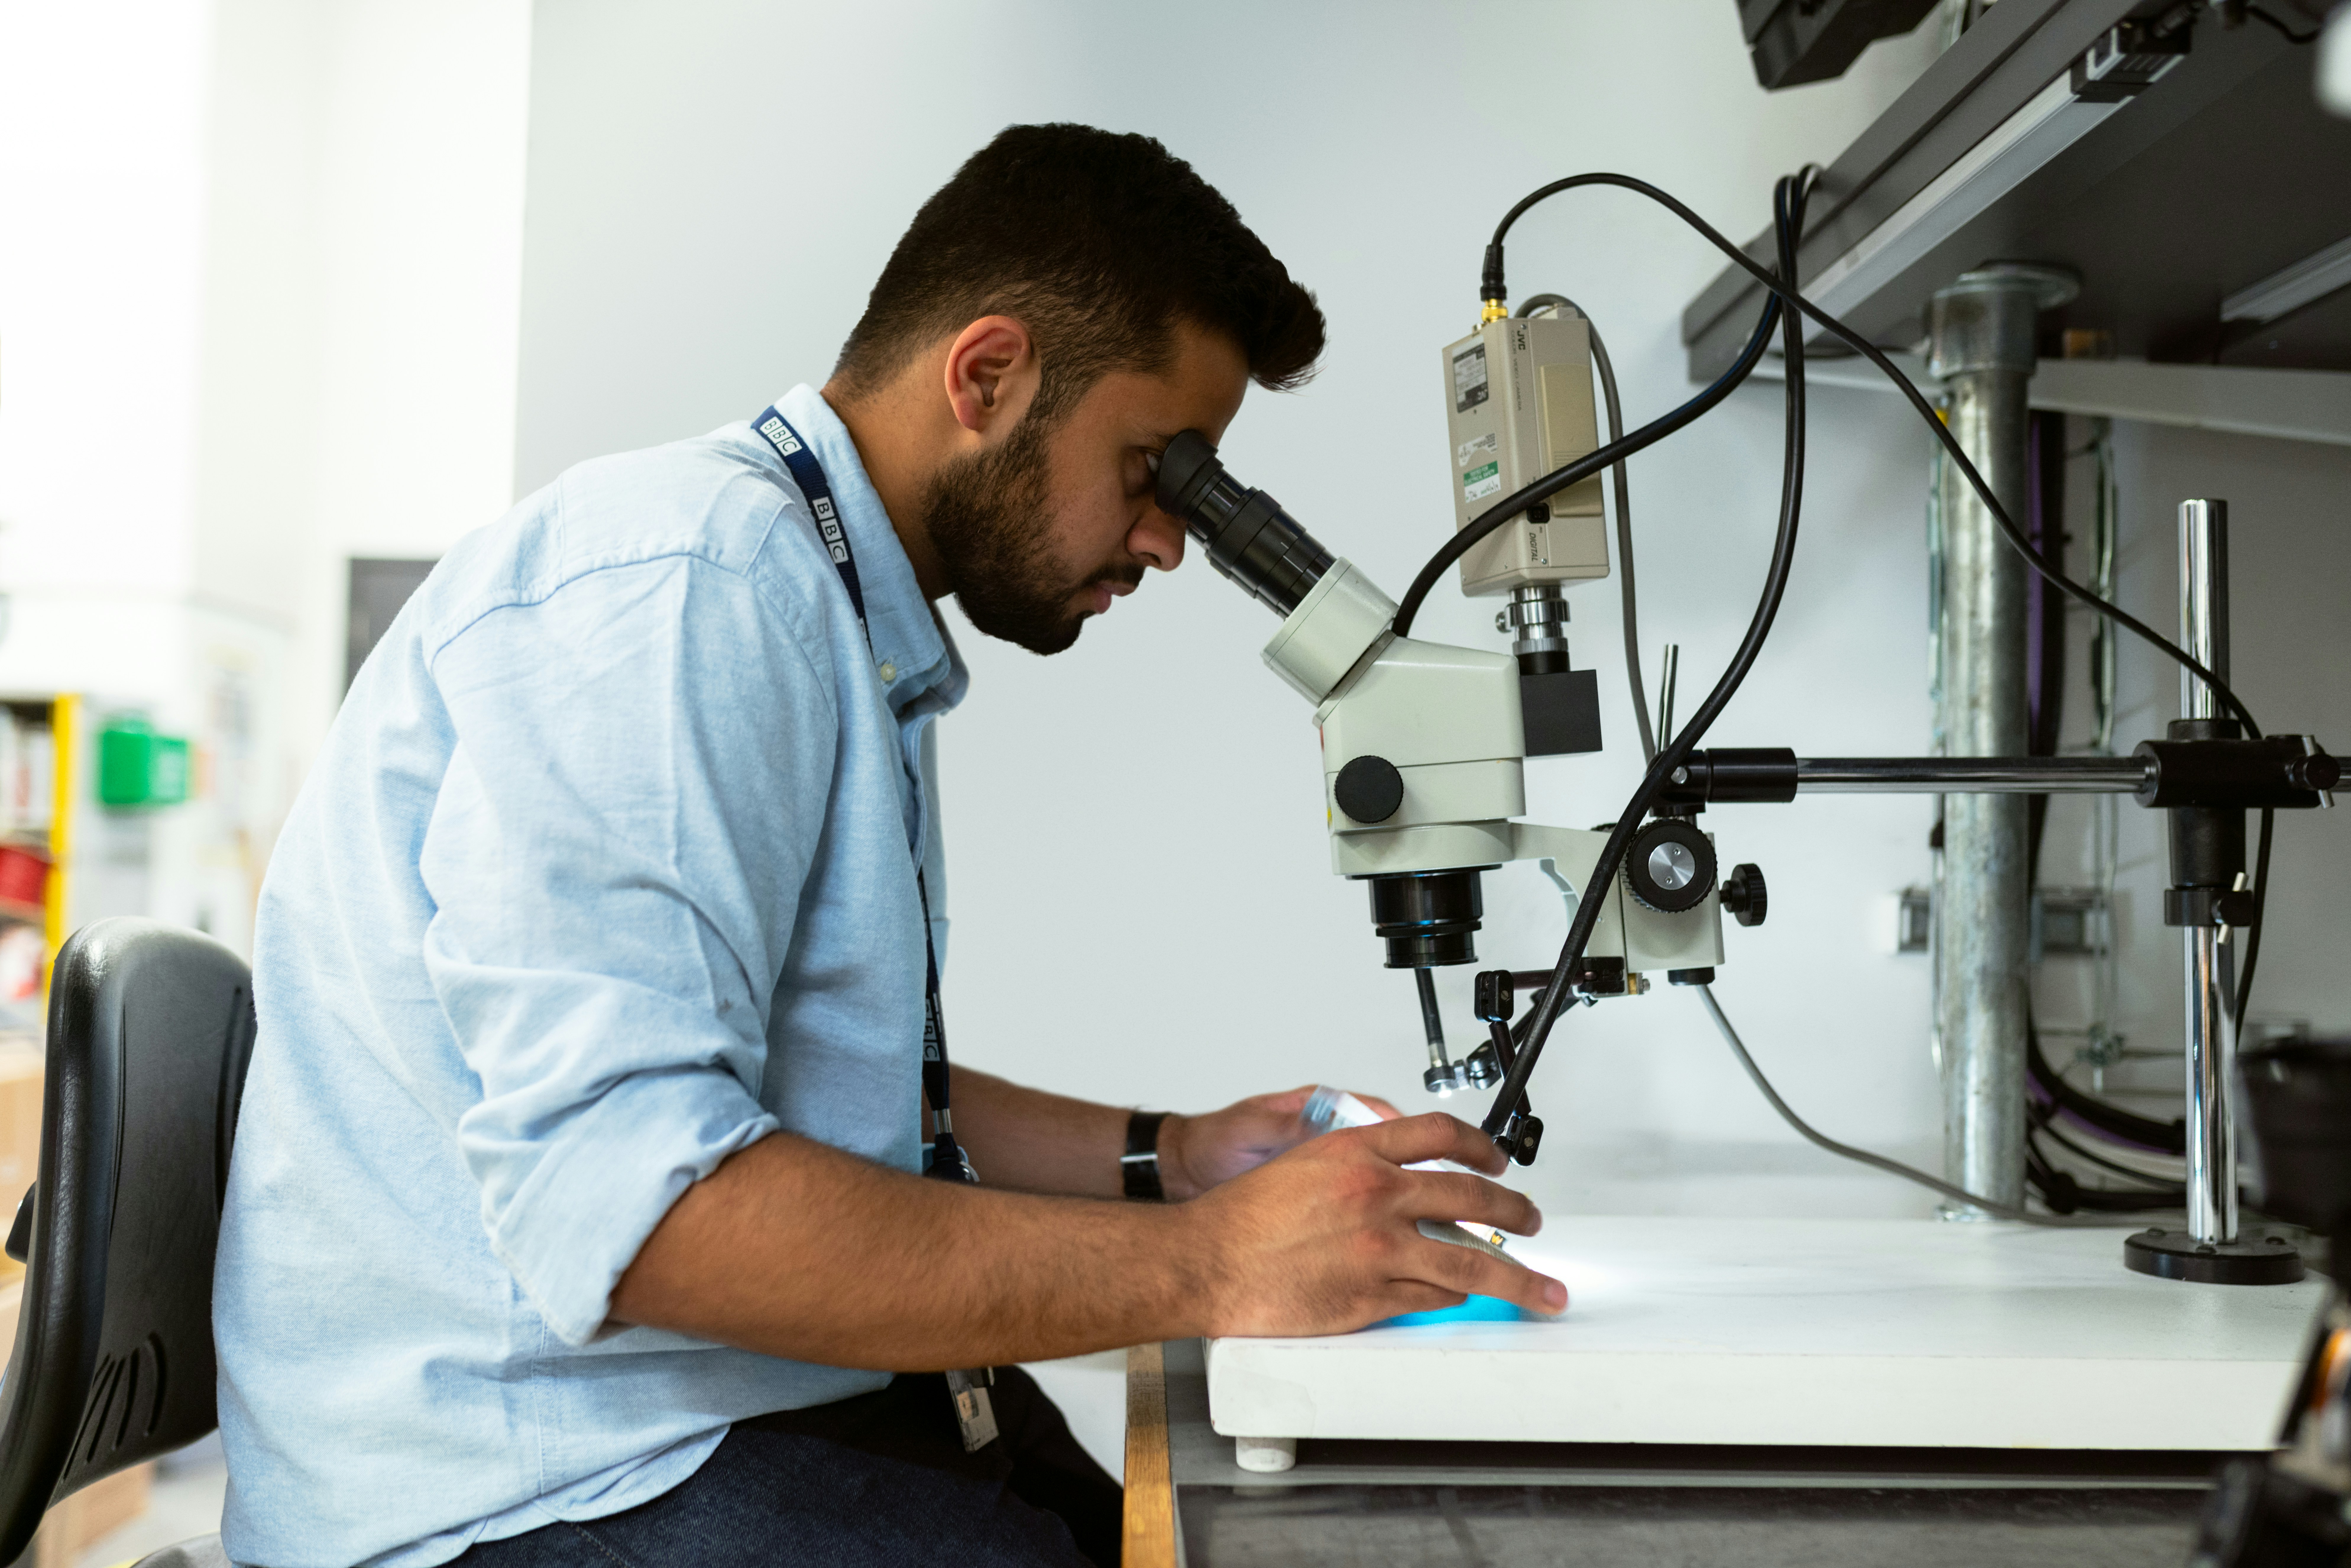 Male broadcast engineer uses microscope